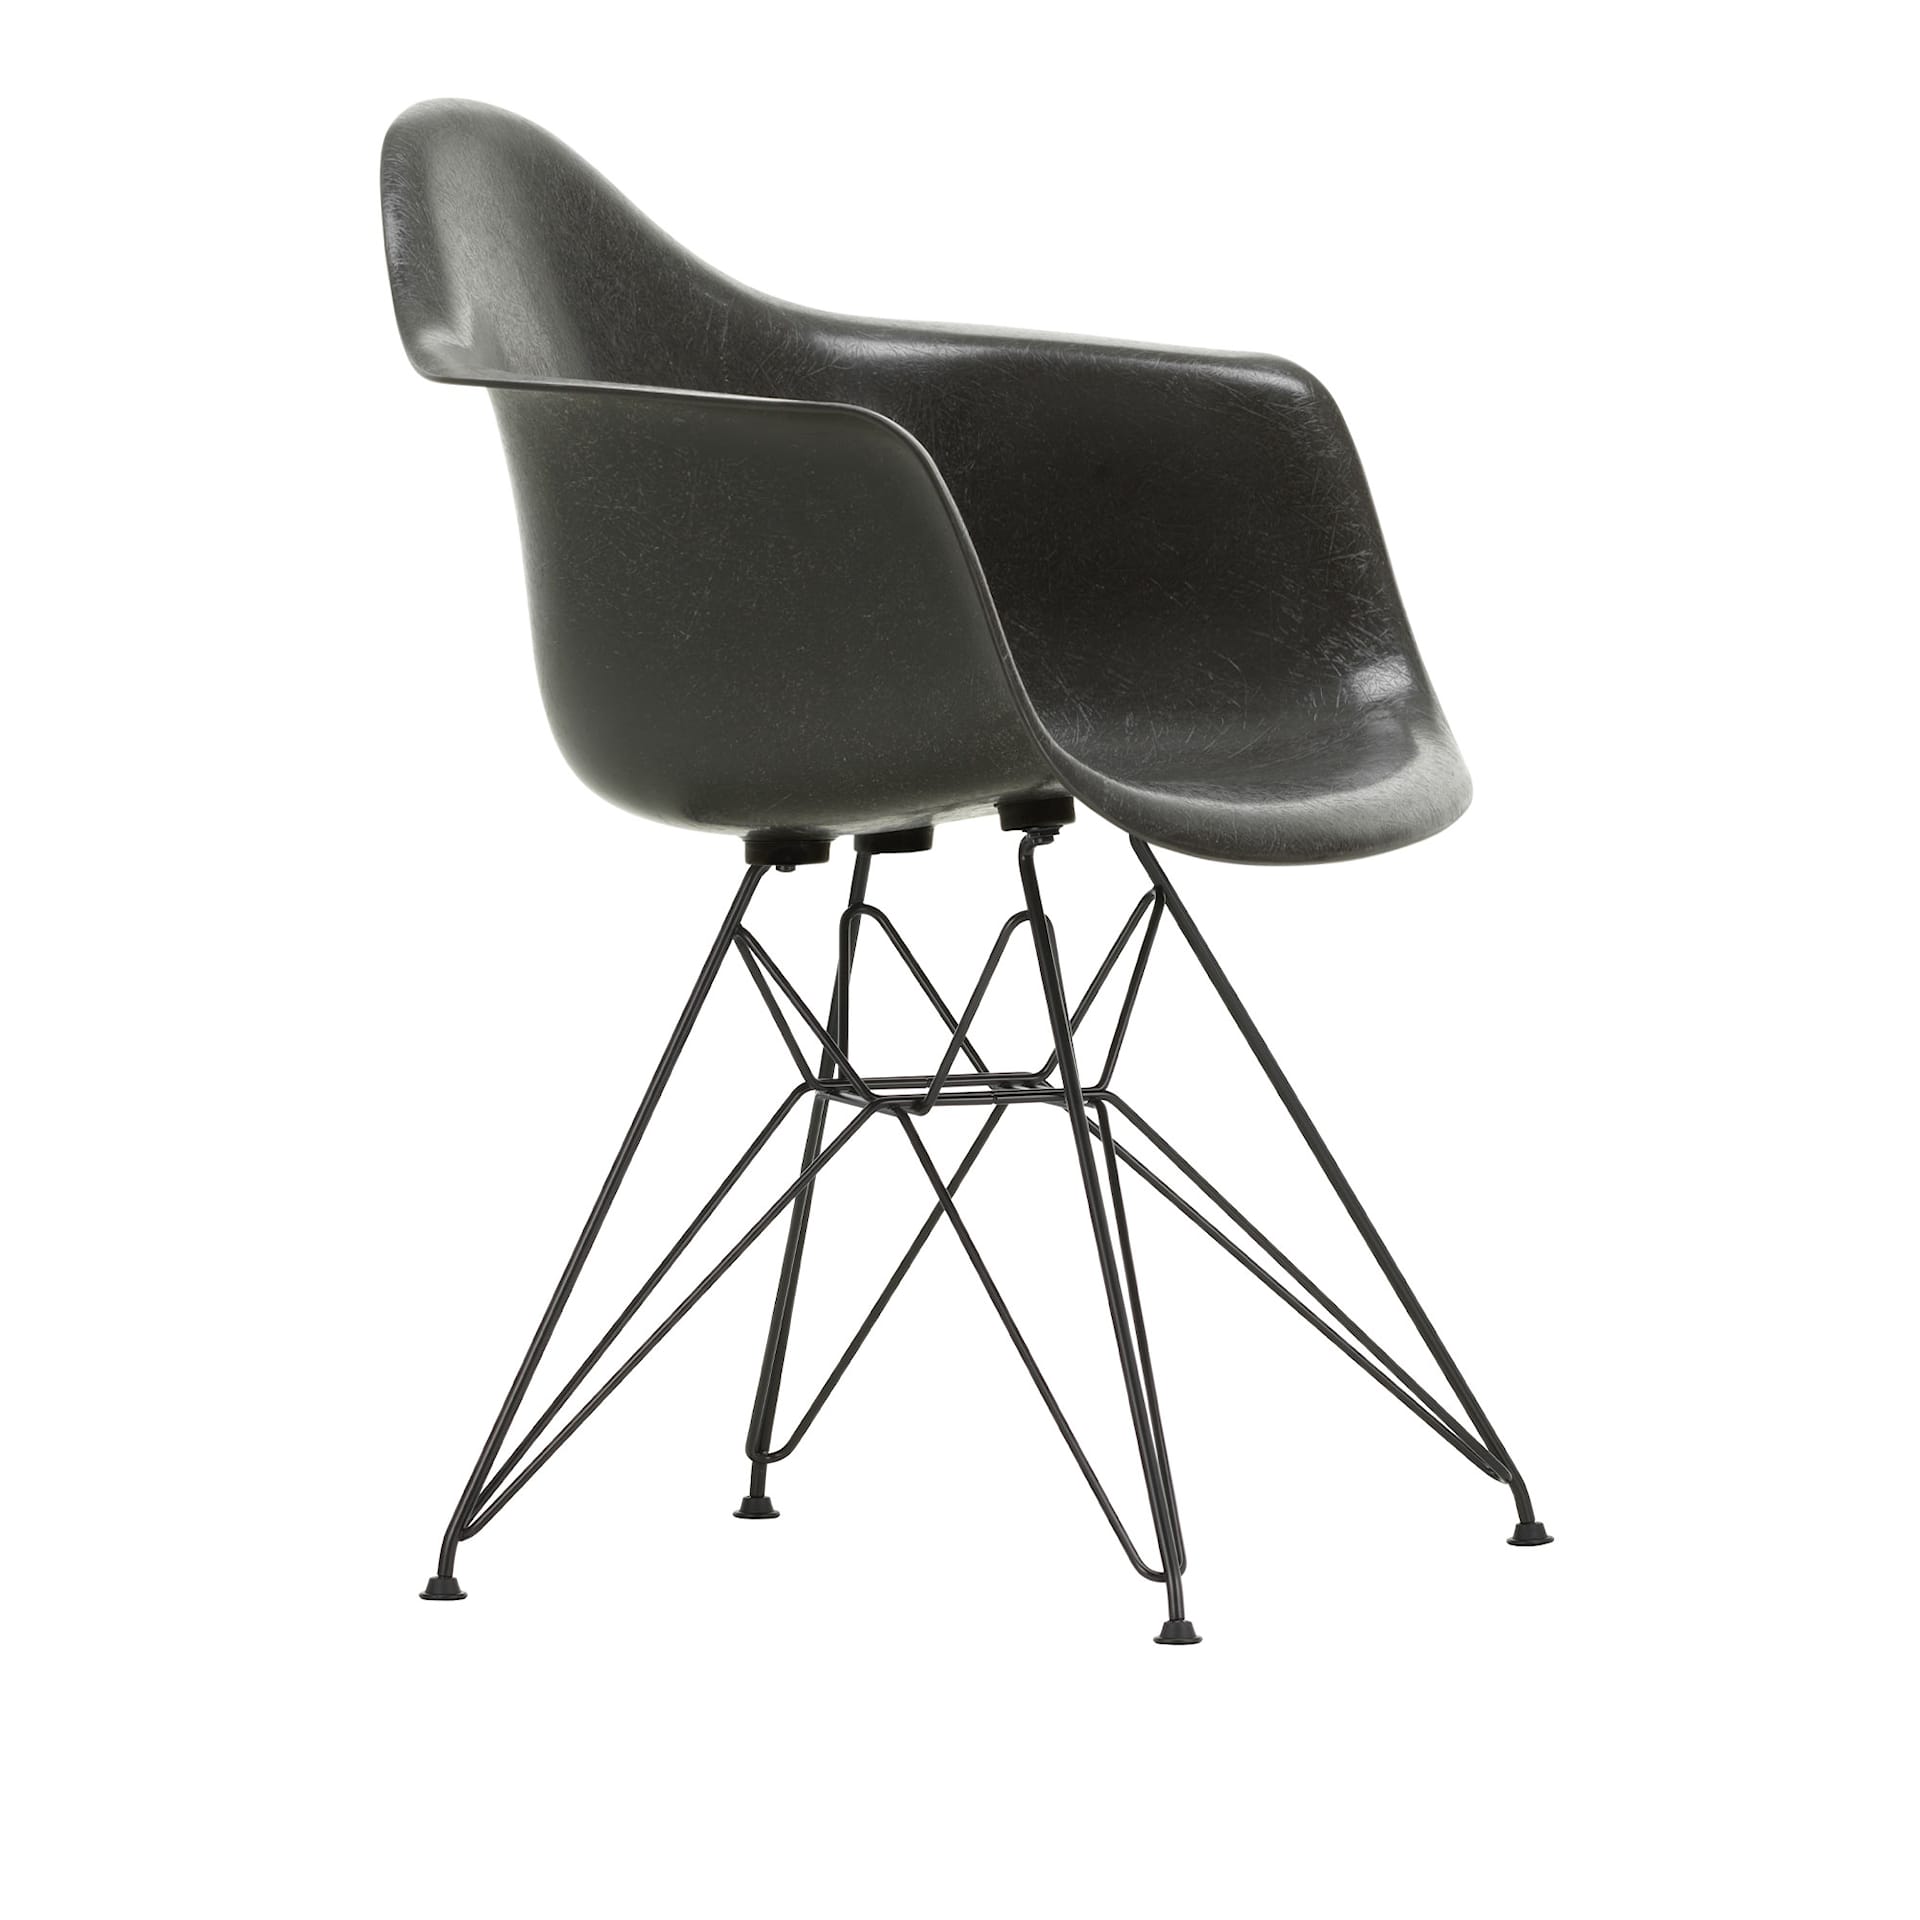 Eames Fiberglass Chair - DAR - Vitra - Charles & Ray Eames - NO GA